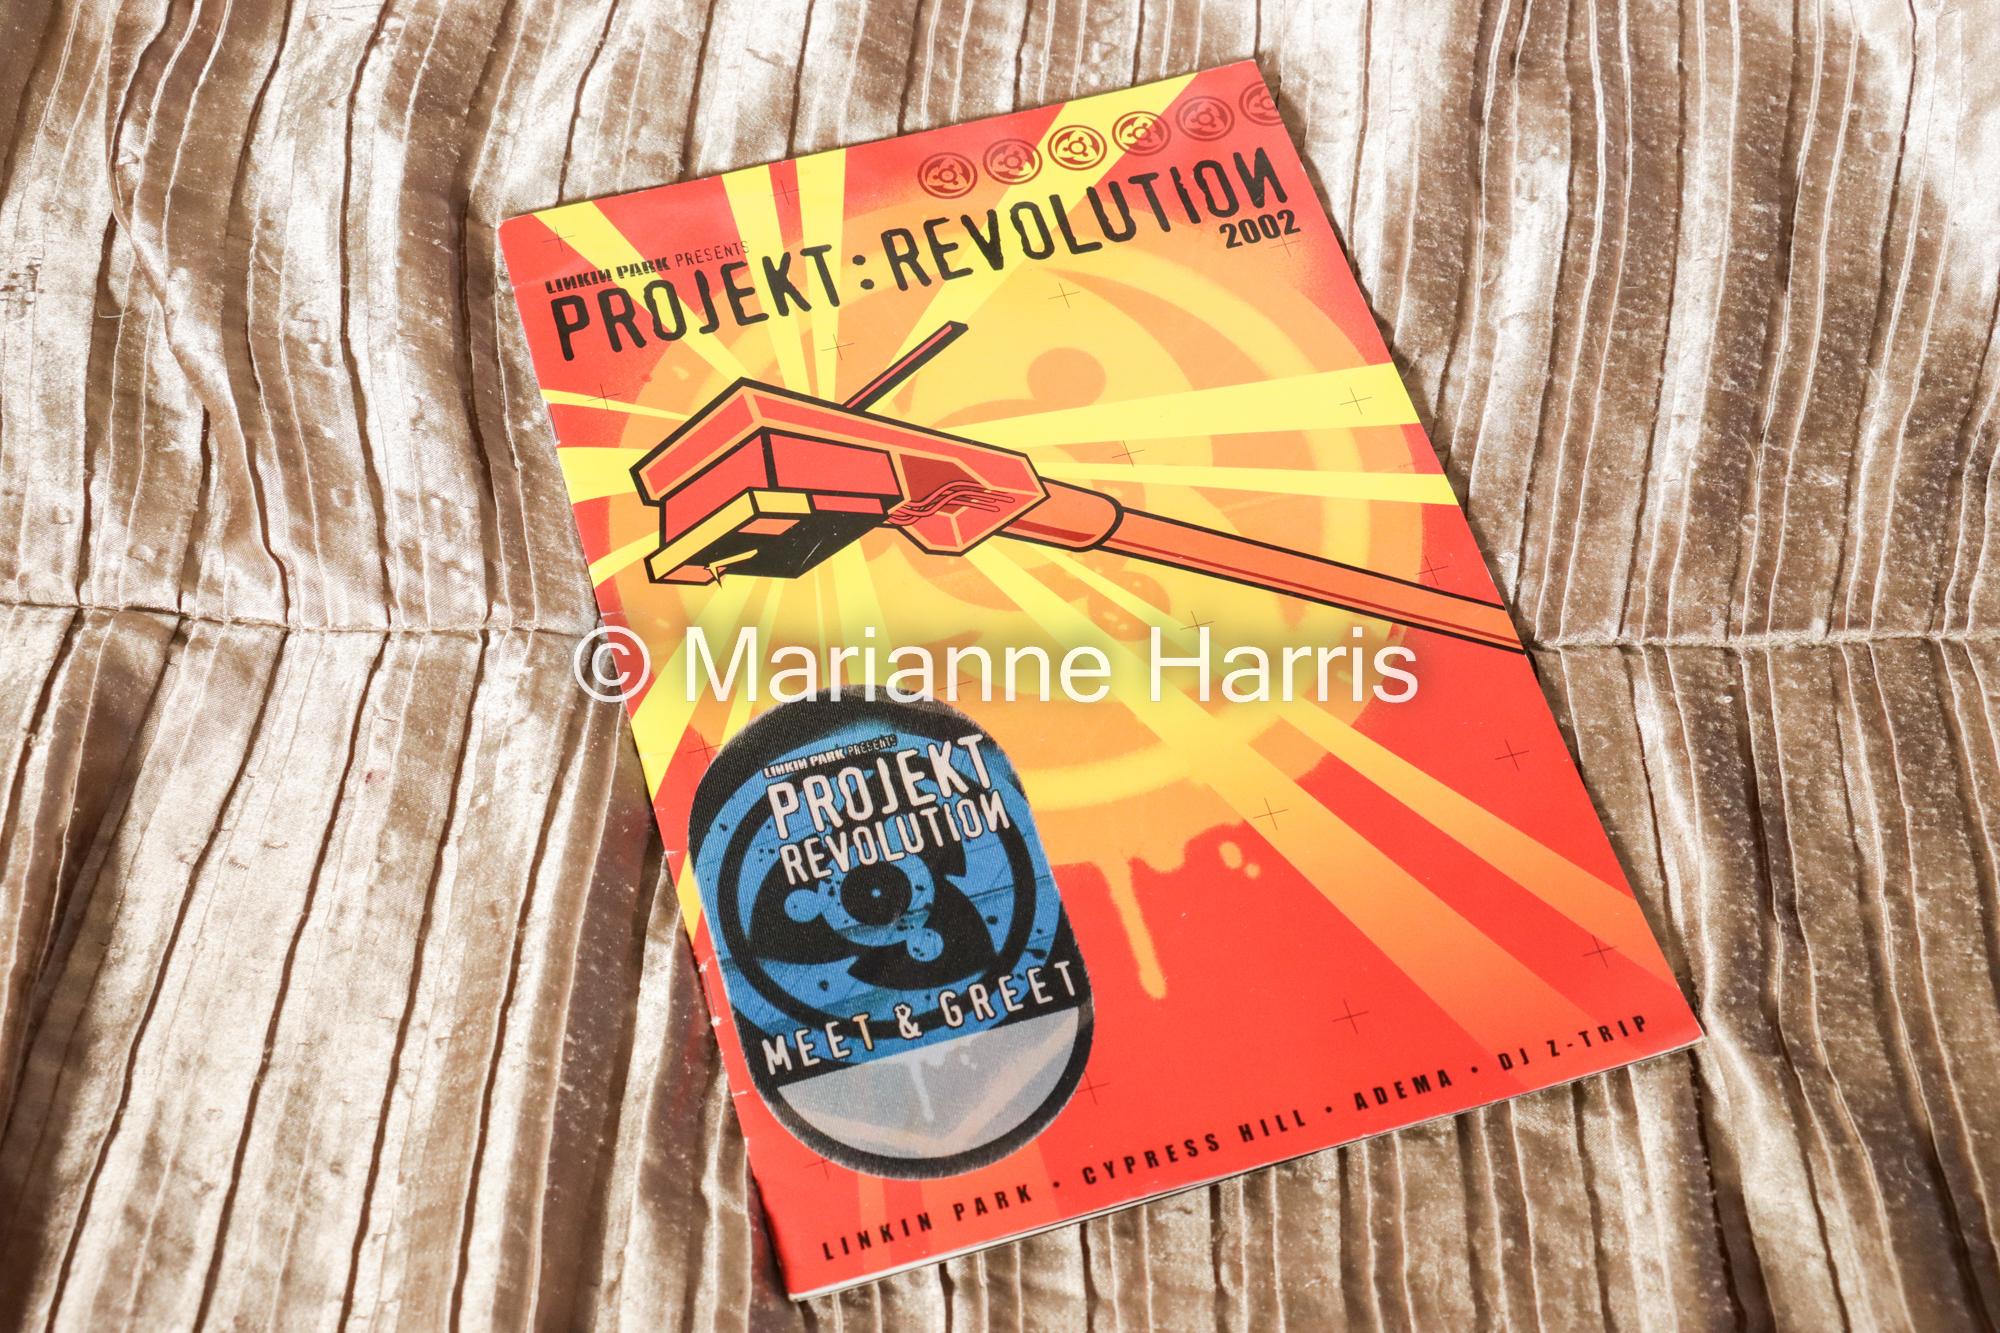 Linkin Park - Projekt Revolution 2002 Tour Book with meet & greet sticker